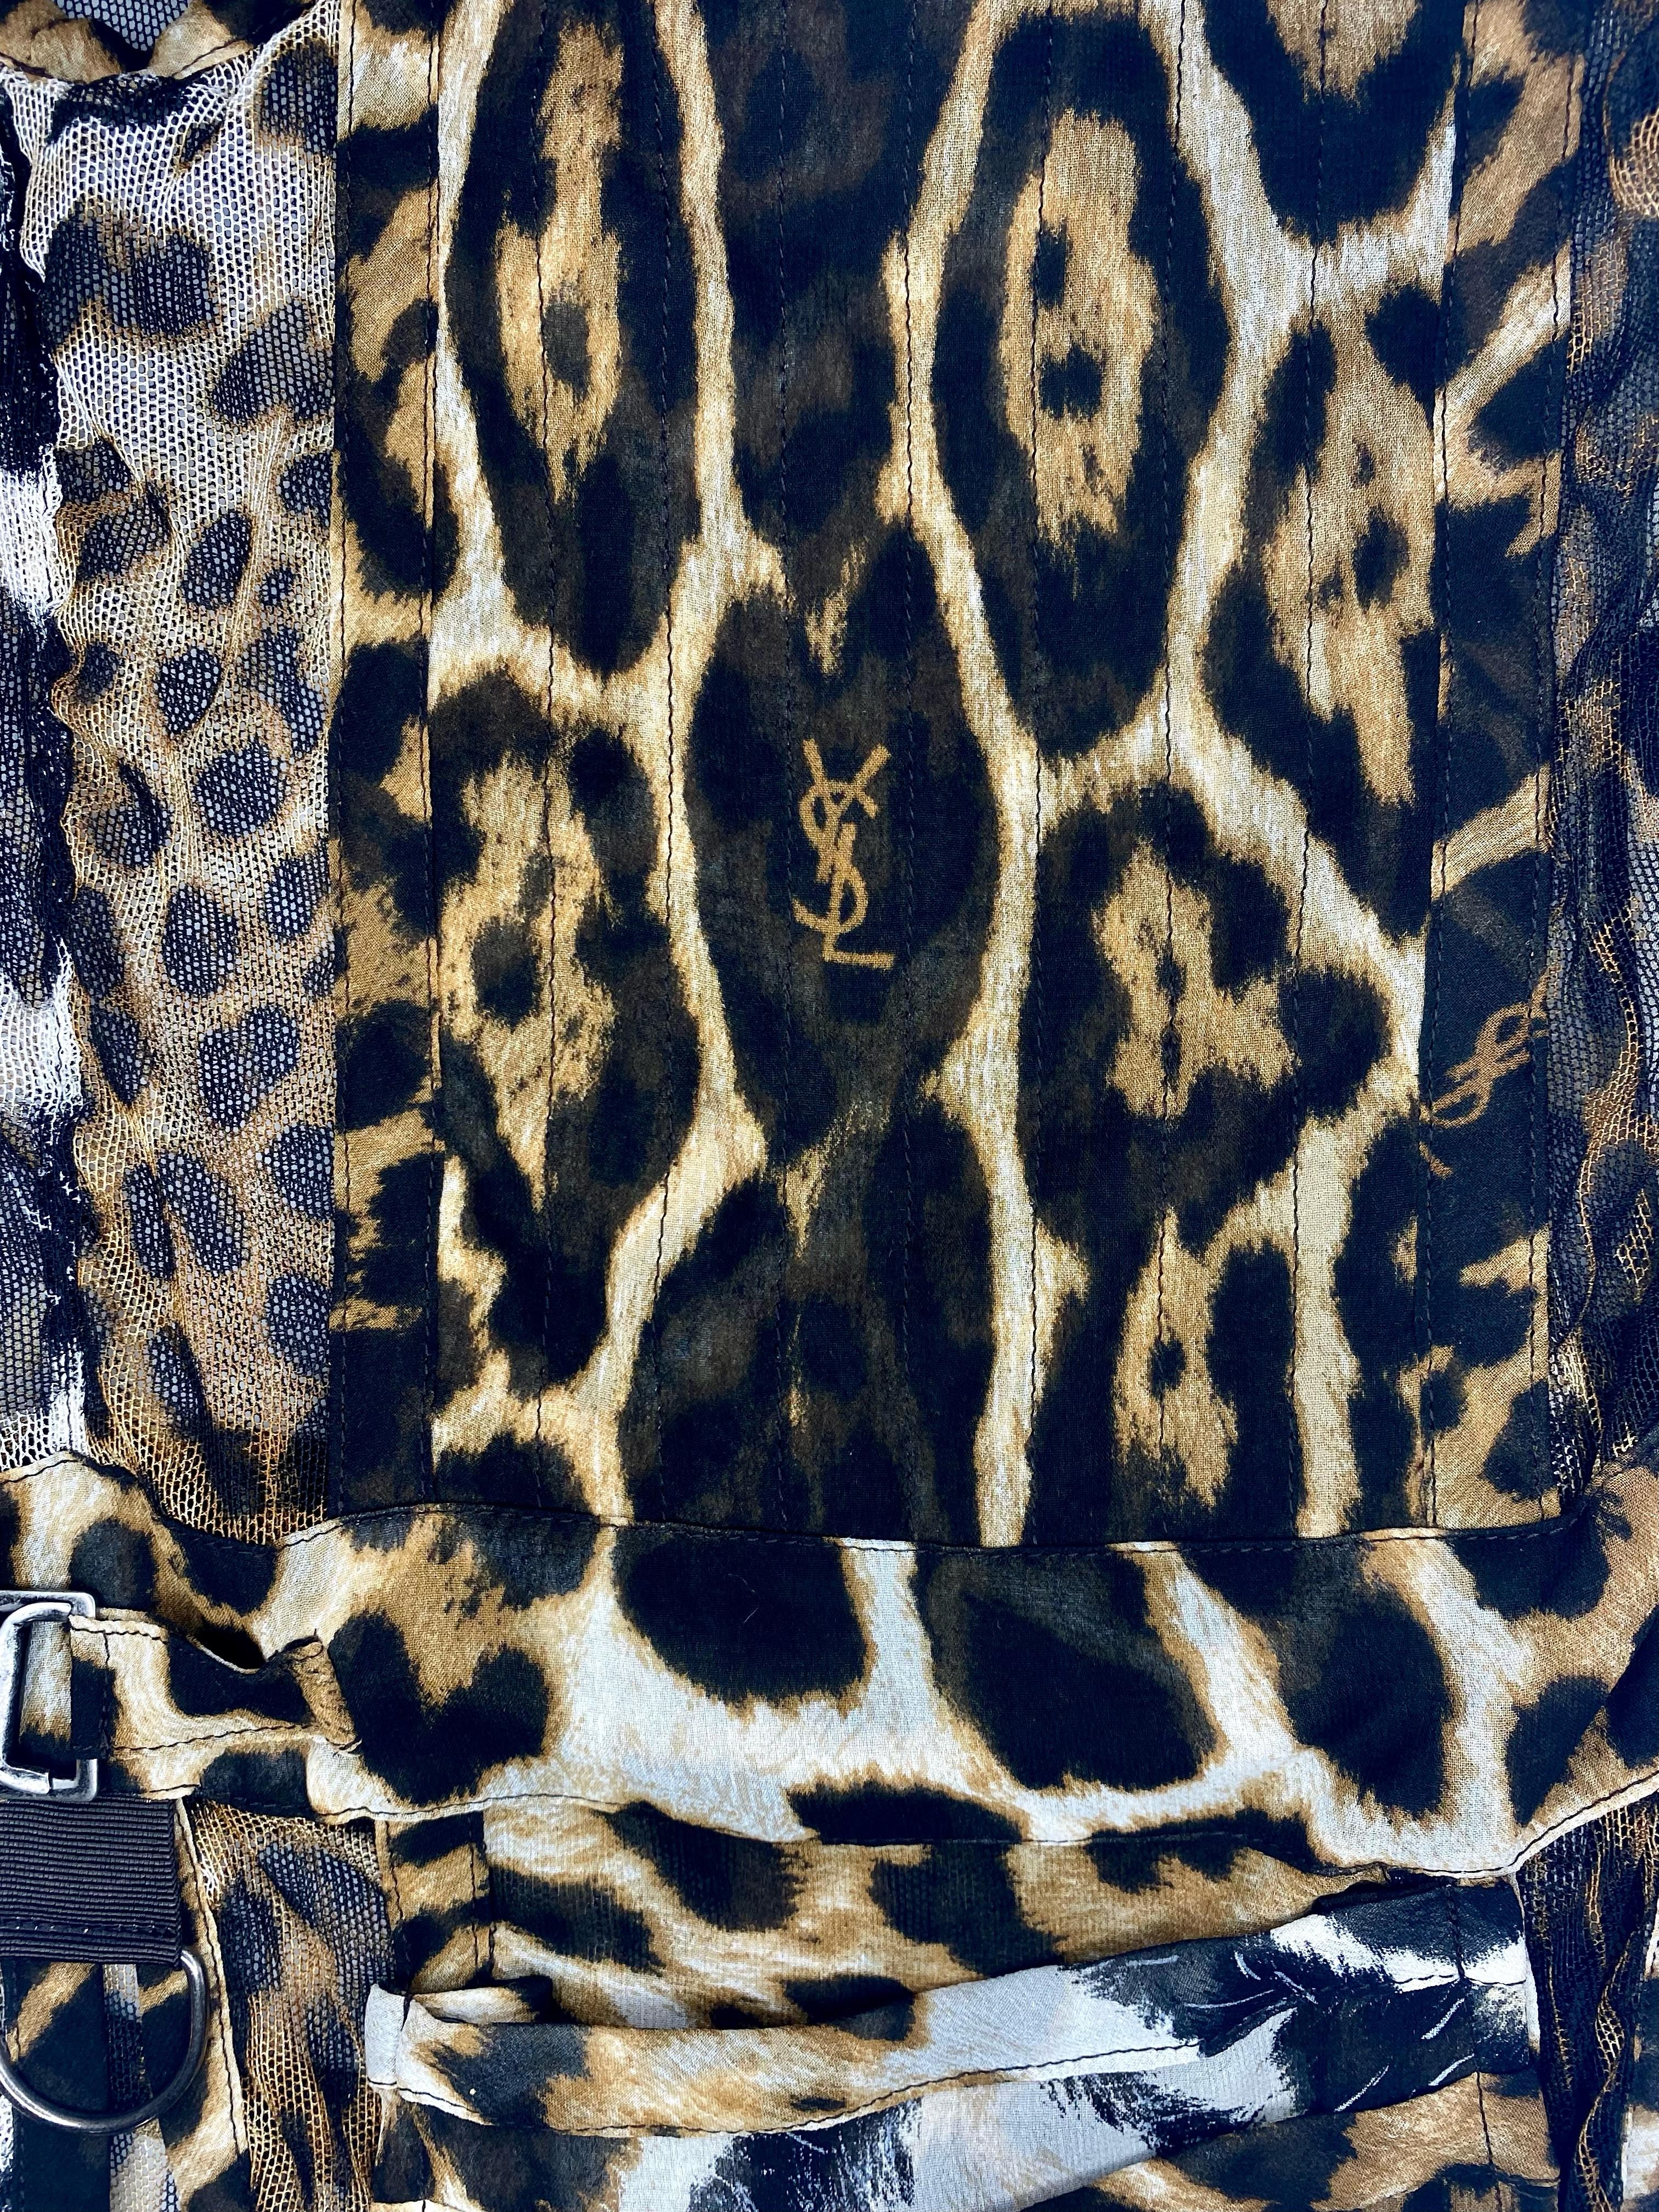 S/S 2002 Yves Saint Laurent by Tom Ford Safari Runway Cheetah Print Skirt Set For Sale 6